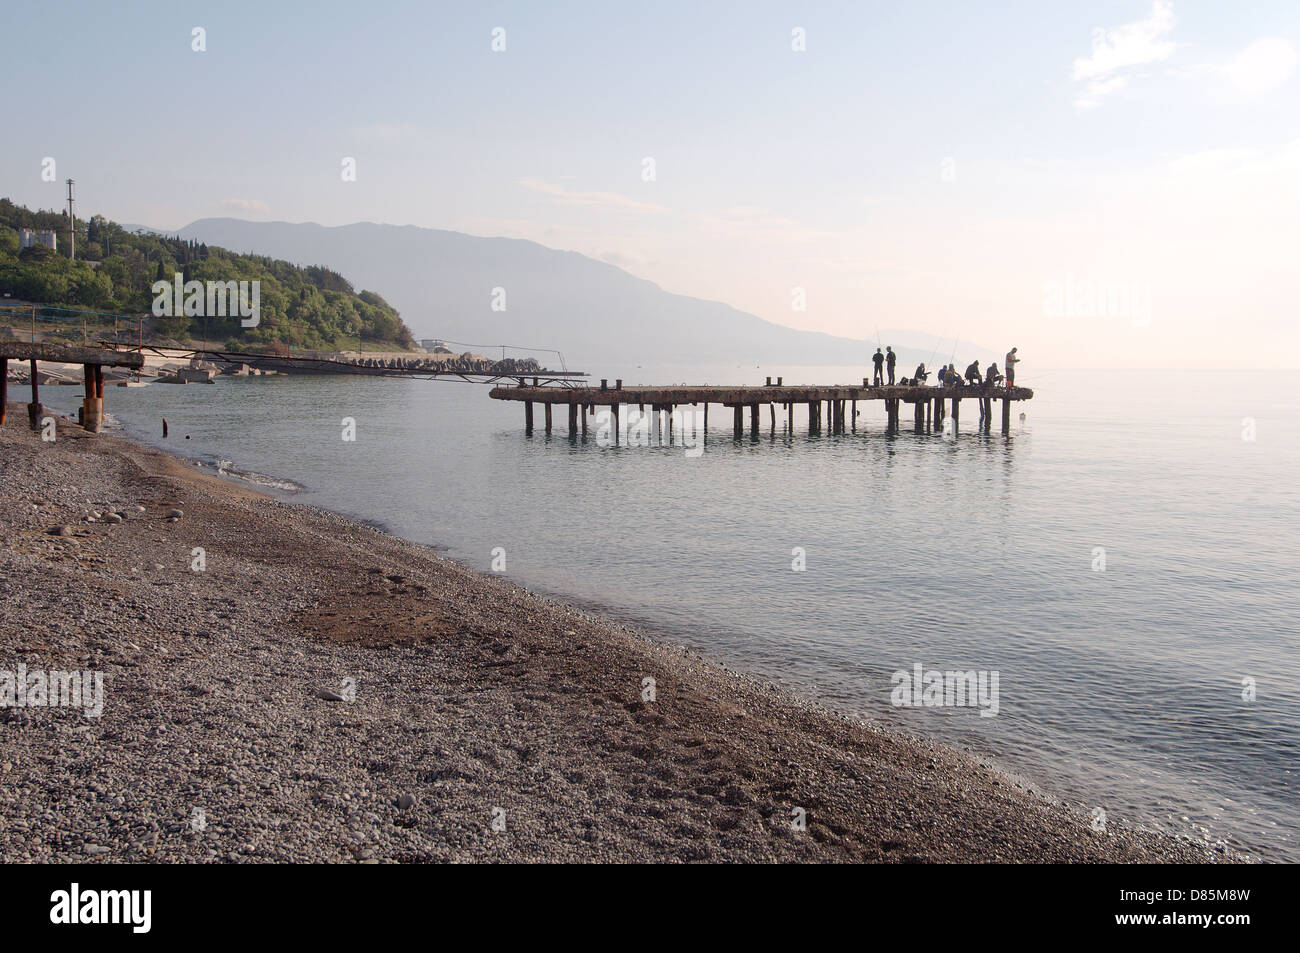 Fishermen catch fish on the pier, The Greater Yalta, Crimea, Ukraine, Eastern Europe Stock Photo